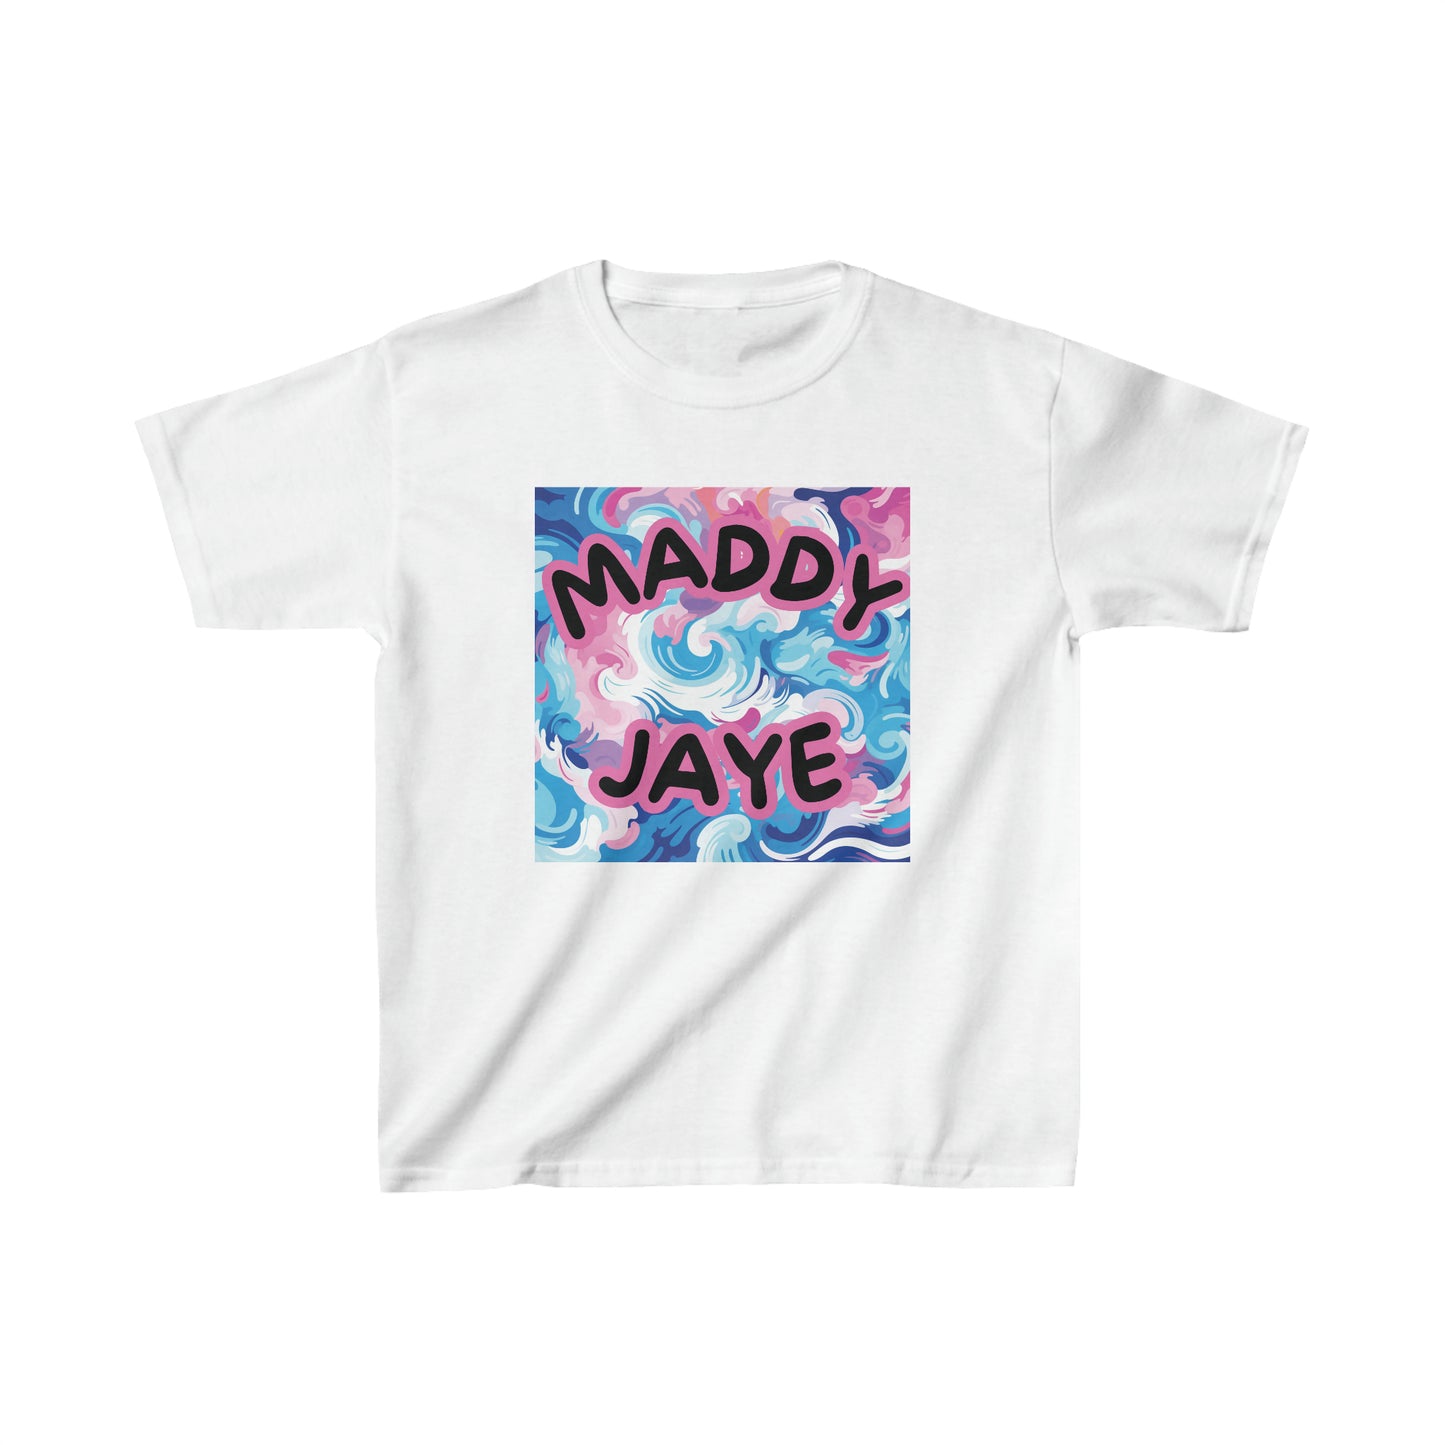 KIDS - MADDY JAYE PRINTED TEE